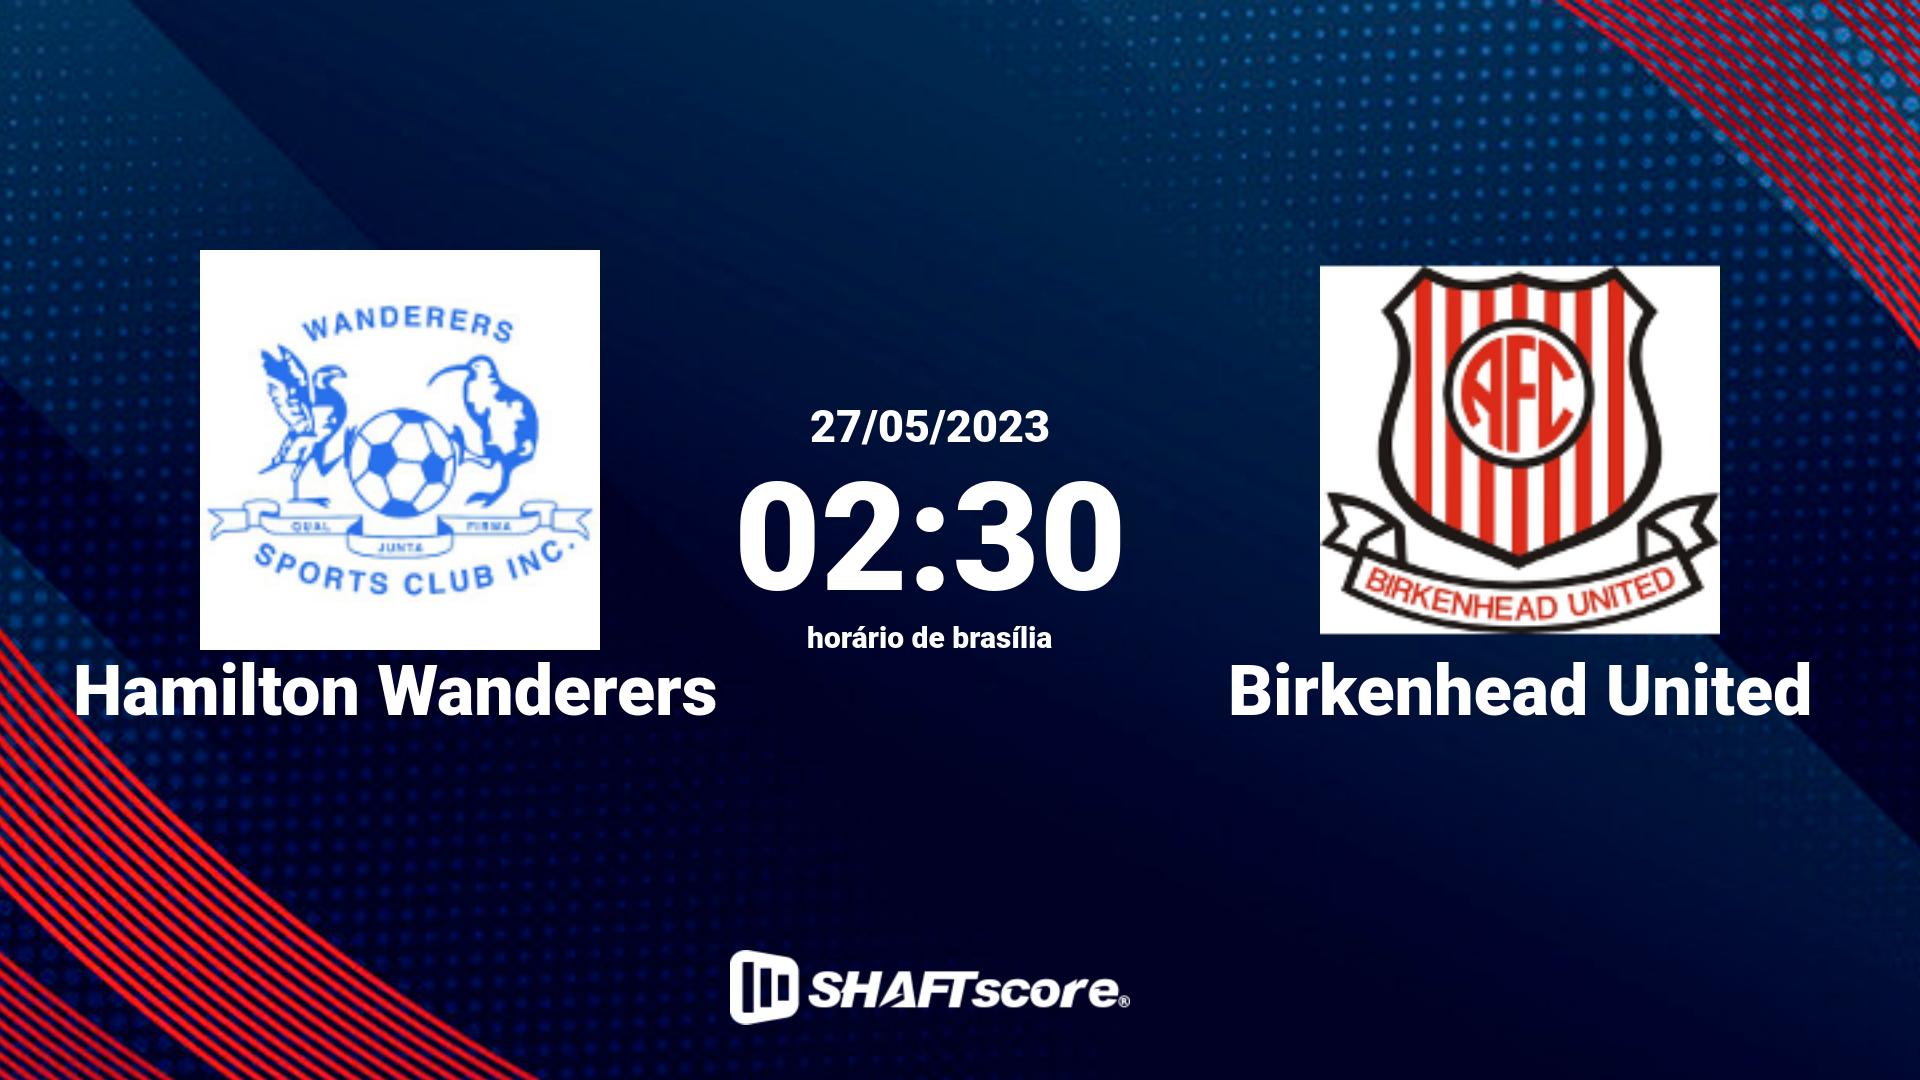 Estatísticas do jogo Hamilton Wanderers vs Birkenhead United 27.05 02:30